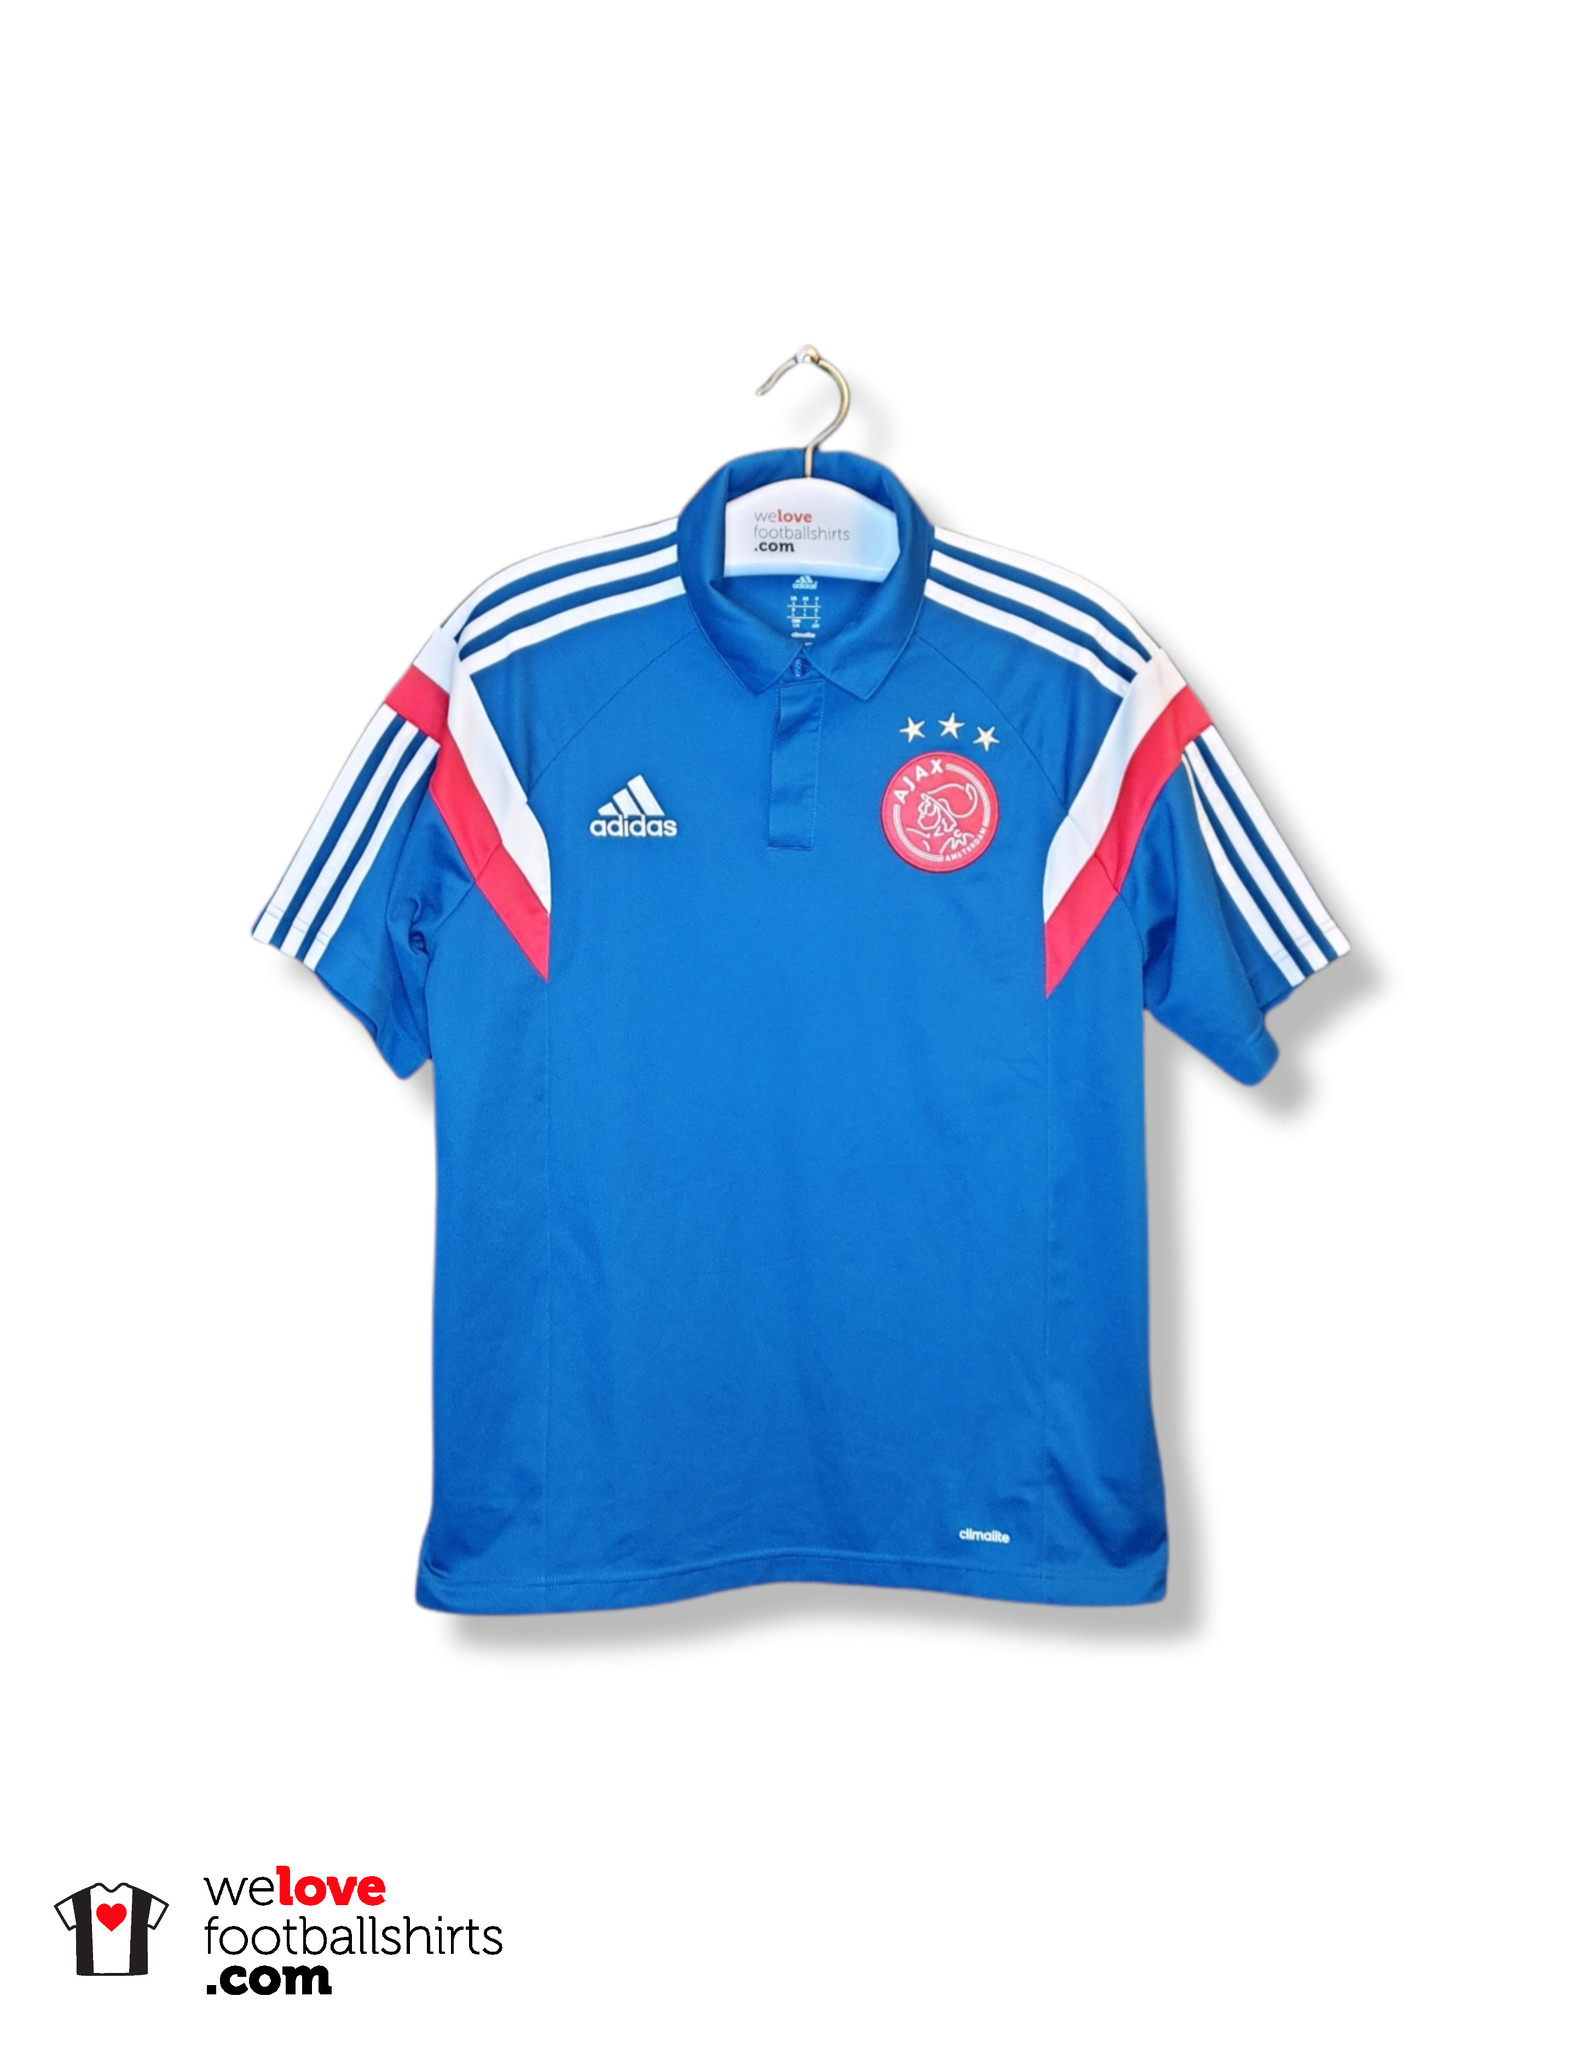 Adidas voetbalpolo Ajax 2014/15 Welovefootballshirts.com